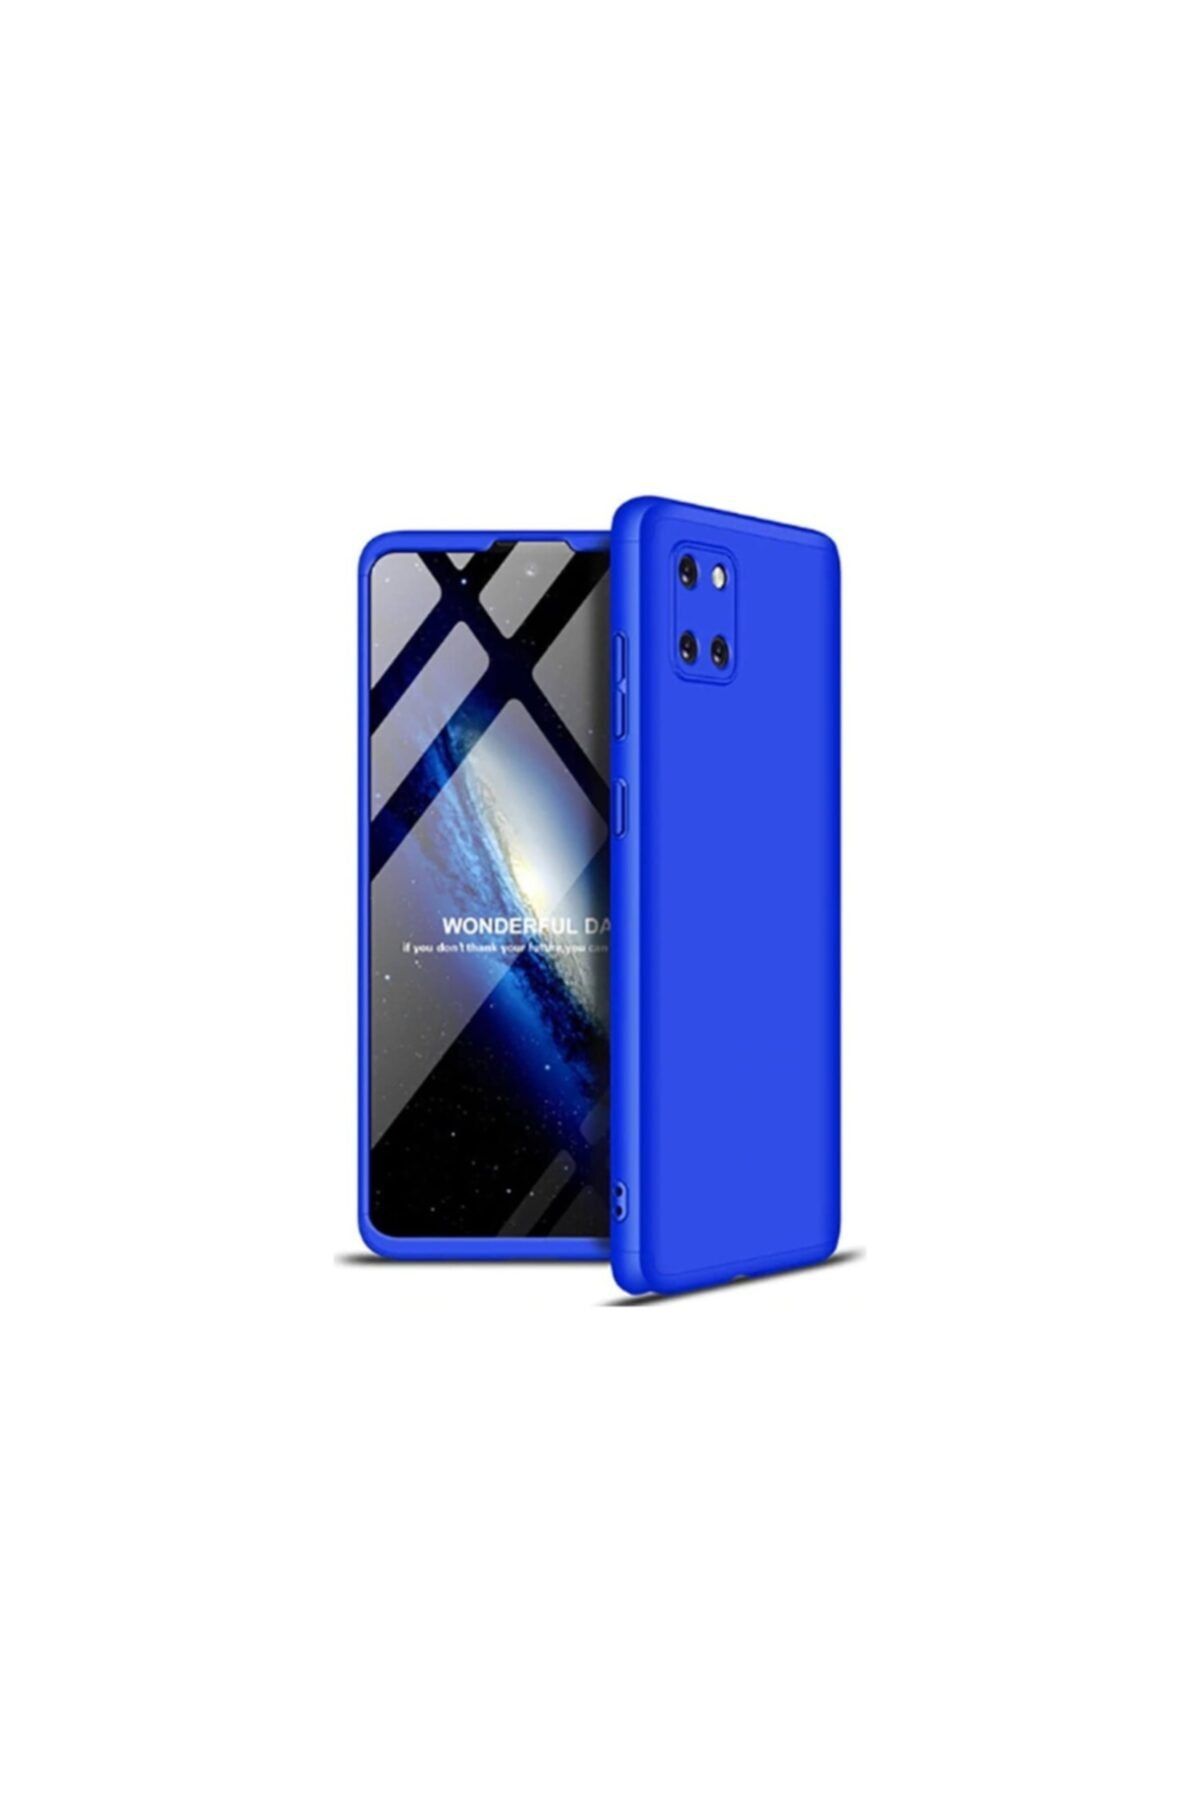 Fibaks Galaxy Note 10 Lite Kılıf 360 Derece 3 Parçalı Tam Koruma Sert Mika Ays Gkk